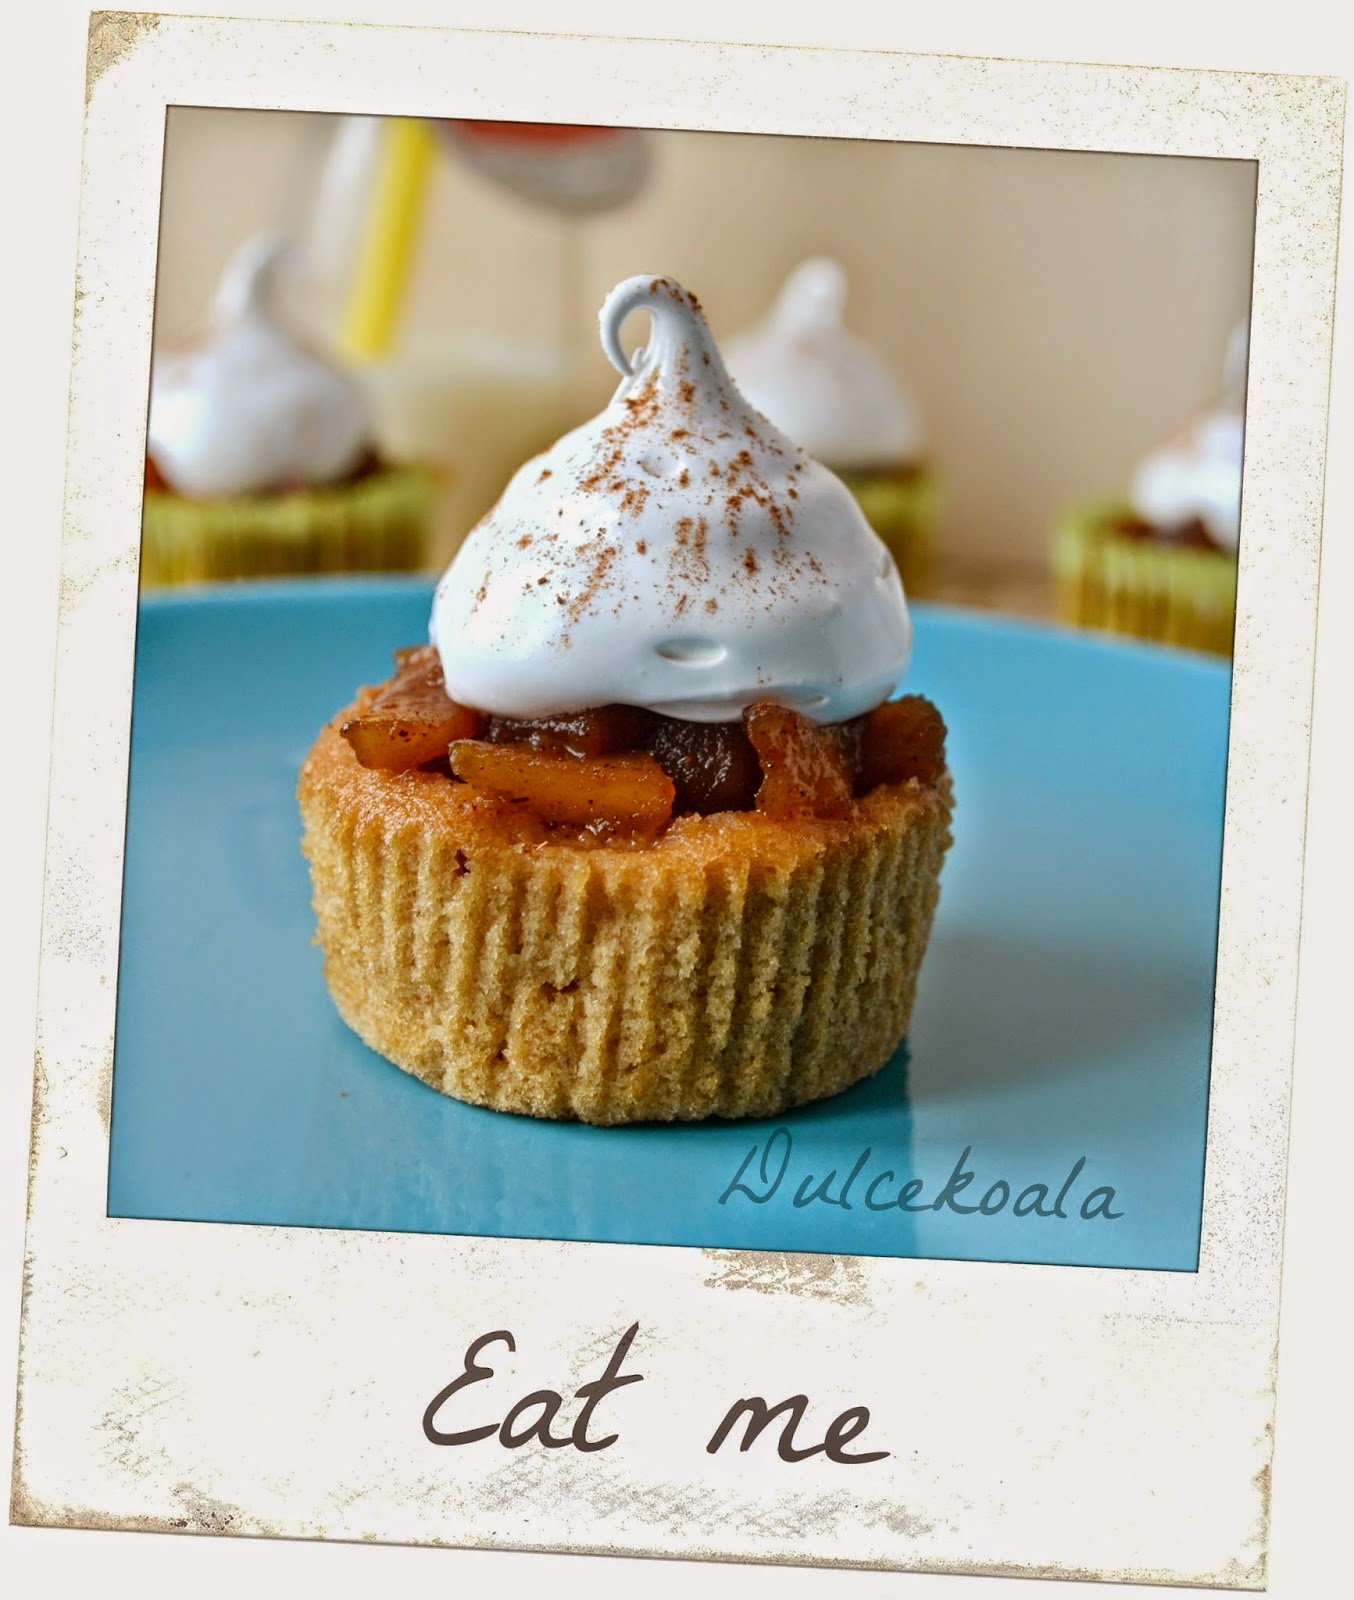 http://dulcekoala.blogspot.com.es/2014/04/cupcakes-de-tarta-de-manzana.html